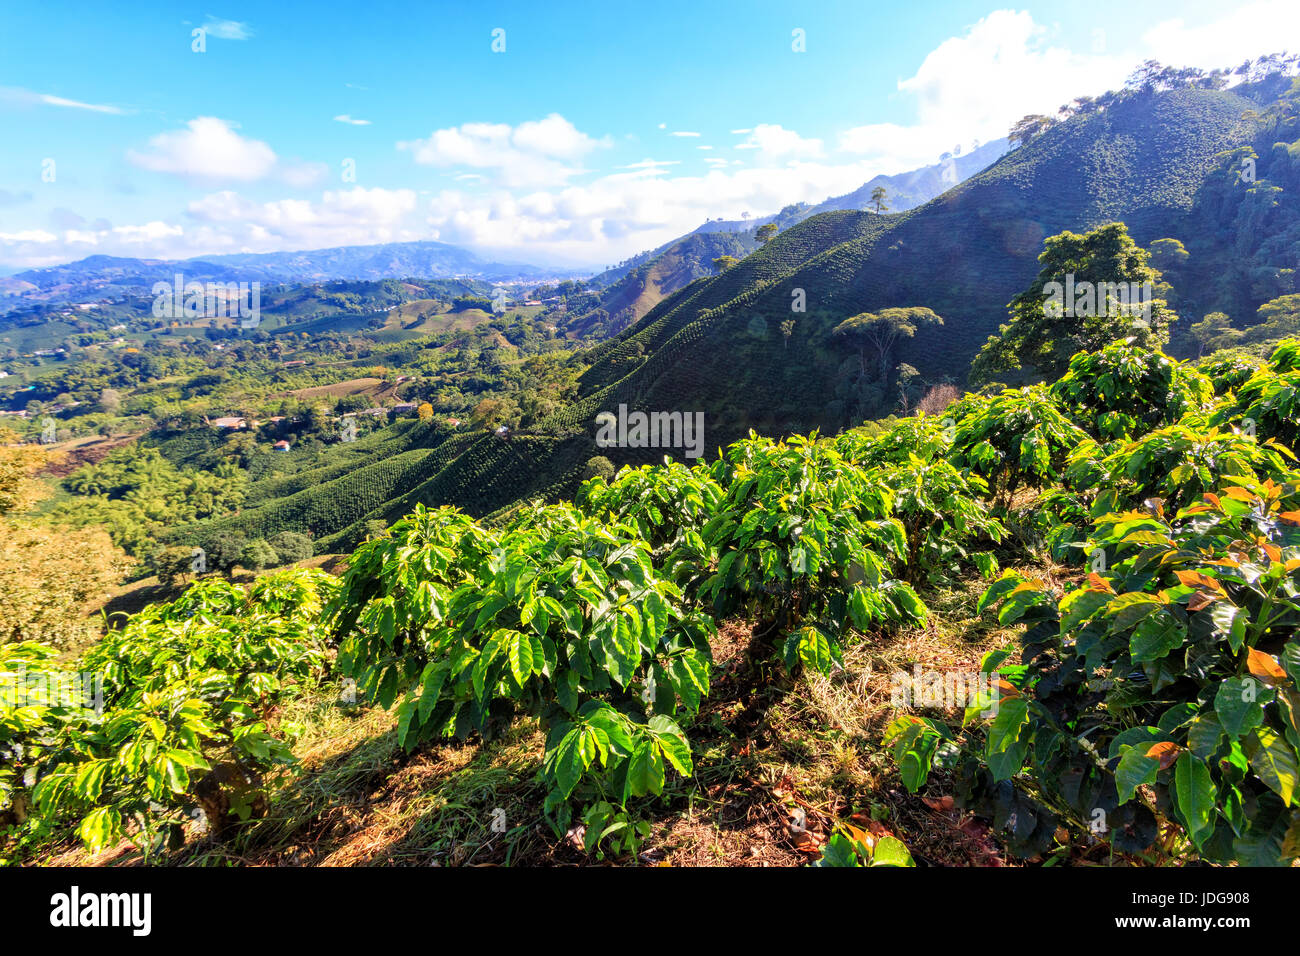 Colombia's Coffee Triangle: Pereira, Manizales And Armenia